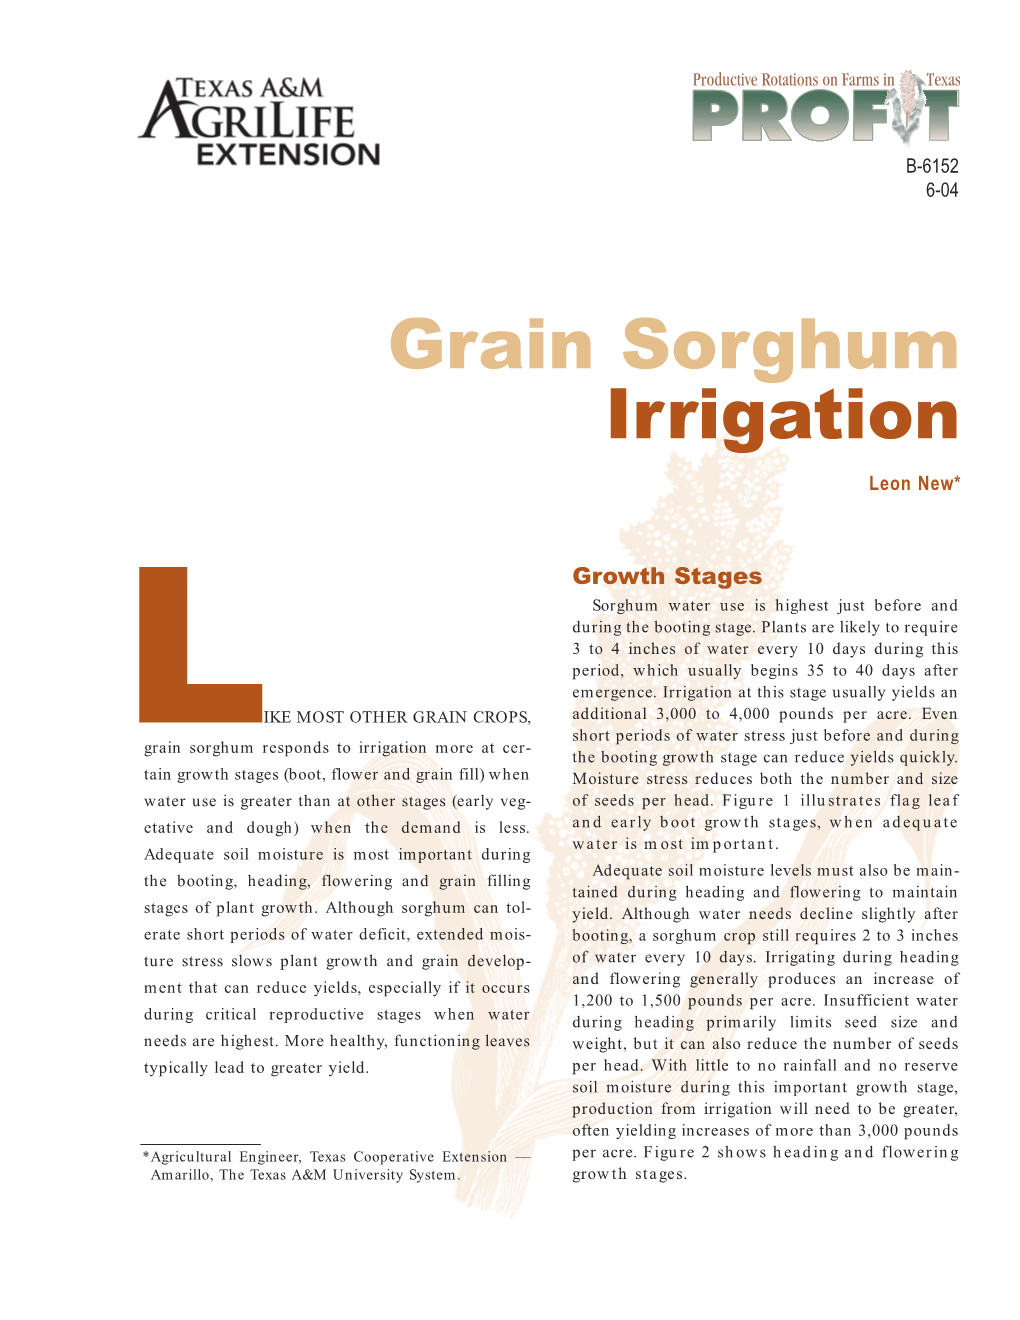 Grain Sorghum Irrigation